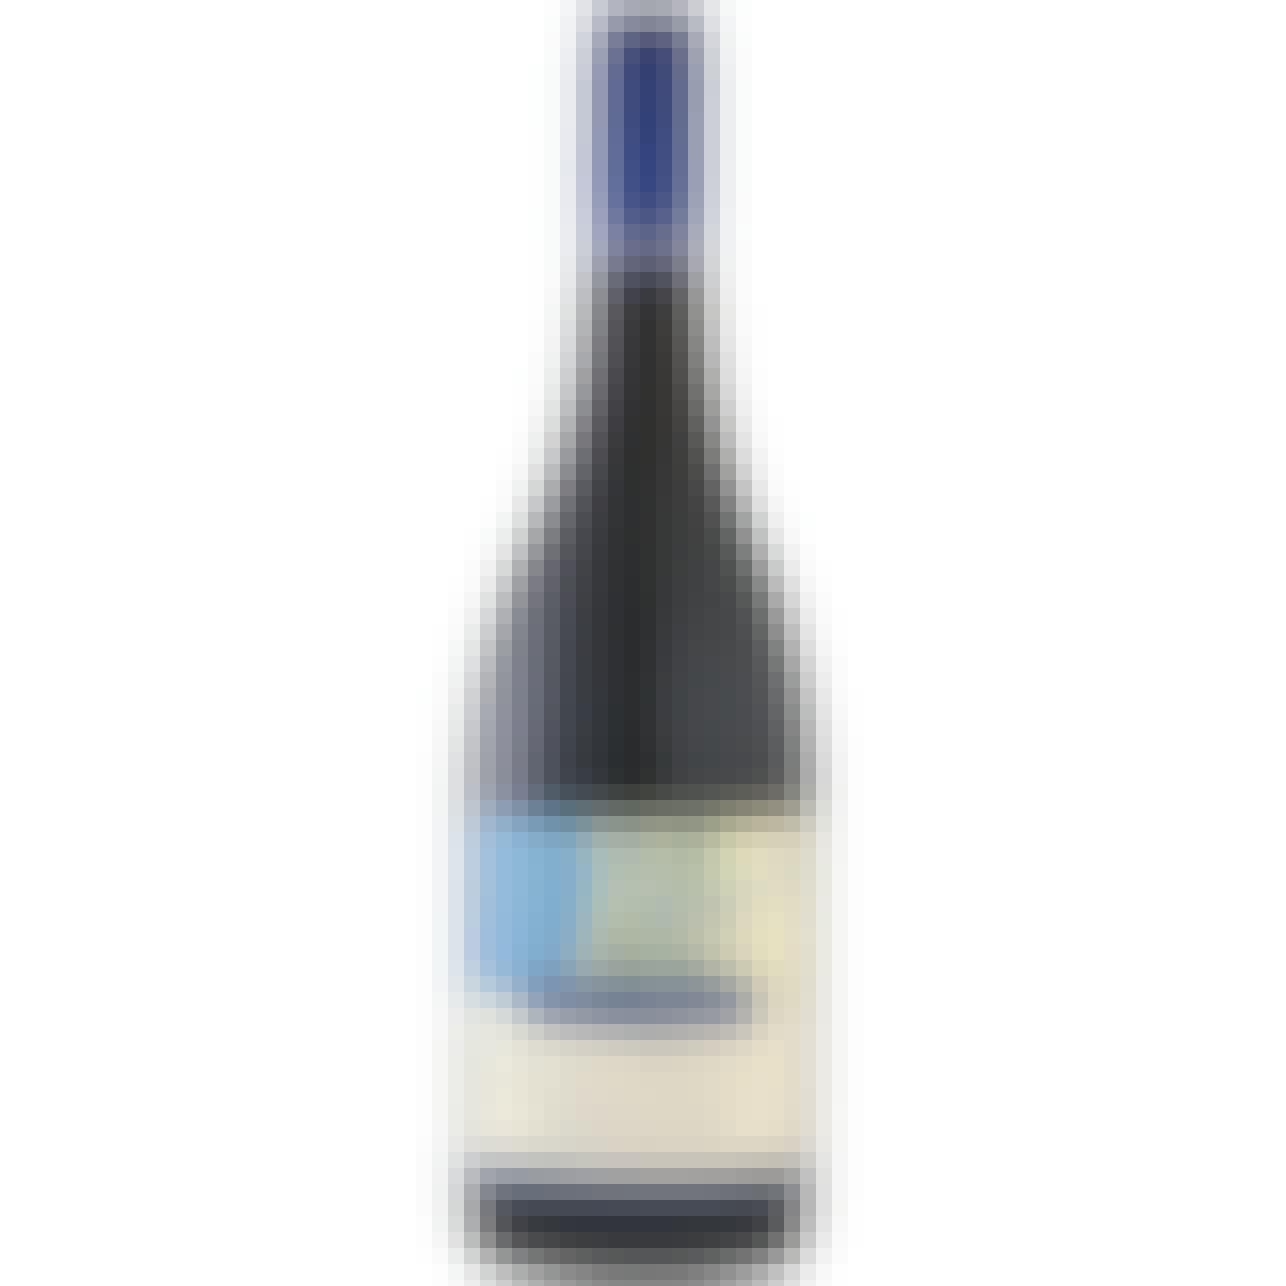 Left Coast Cellars Cali's Cuvée Pinot Noir 2019 750ml